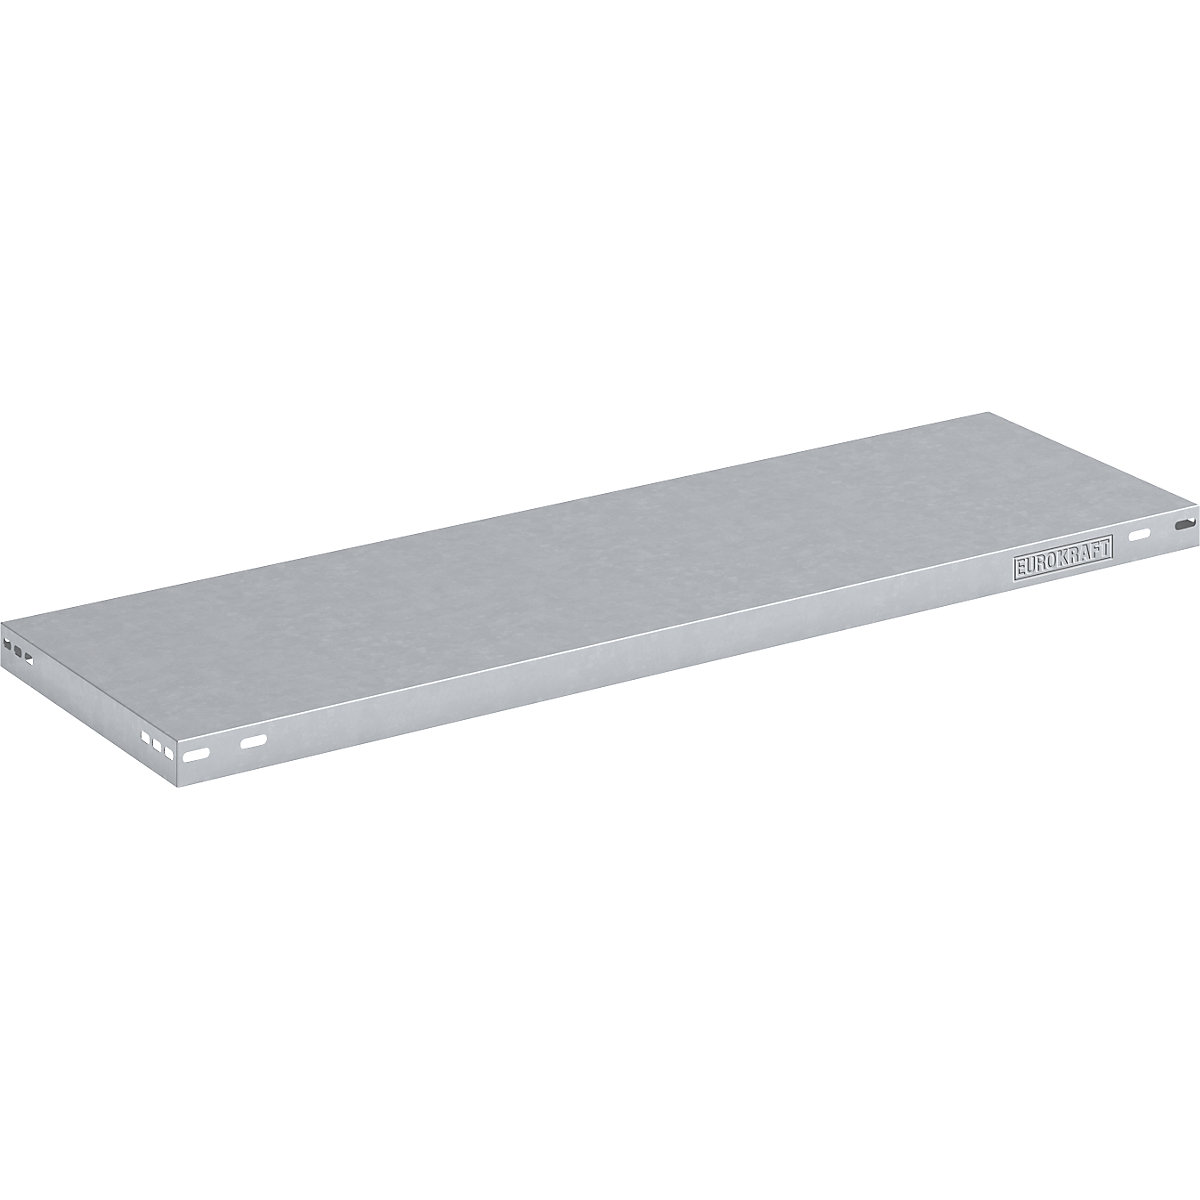 Steel shelf, max. load 125 kg – eurokraft pro, zinc plated, WxD 1000 x 400 mm